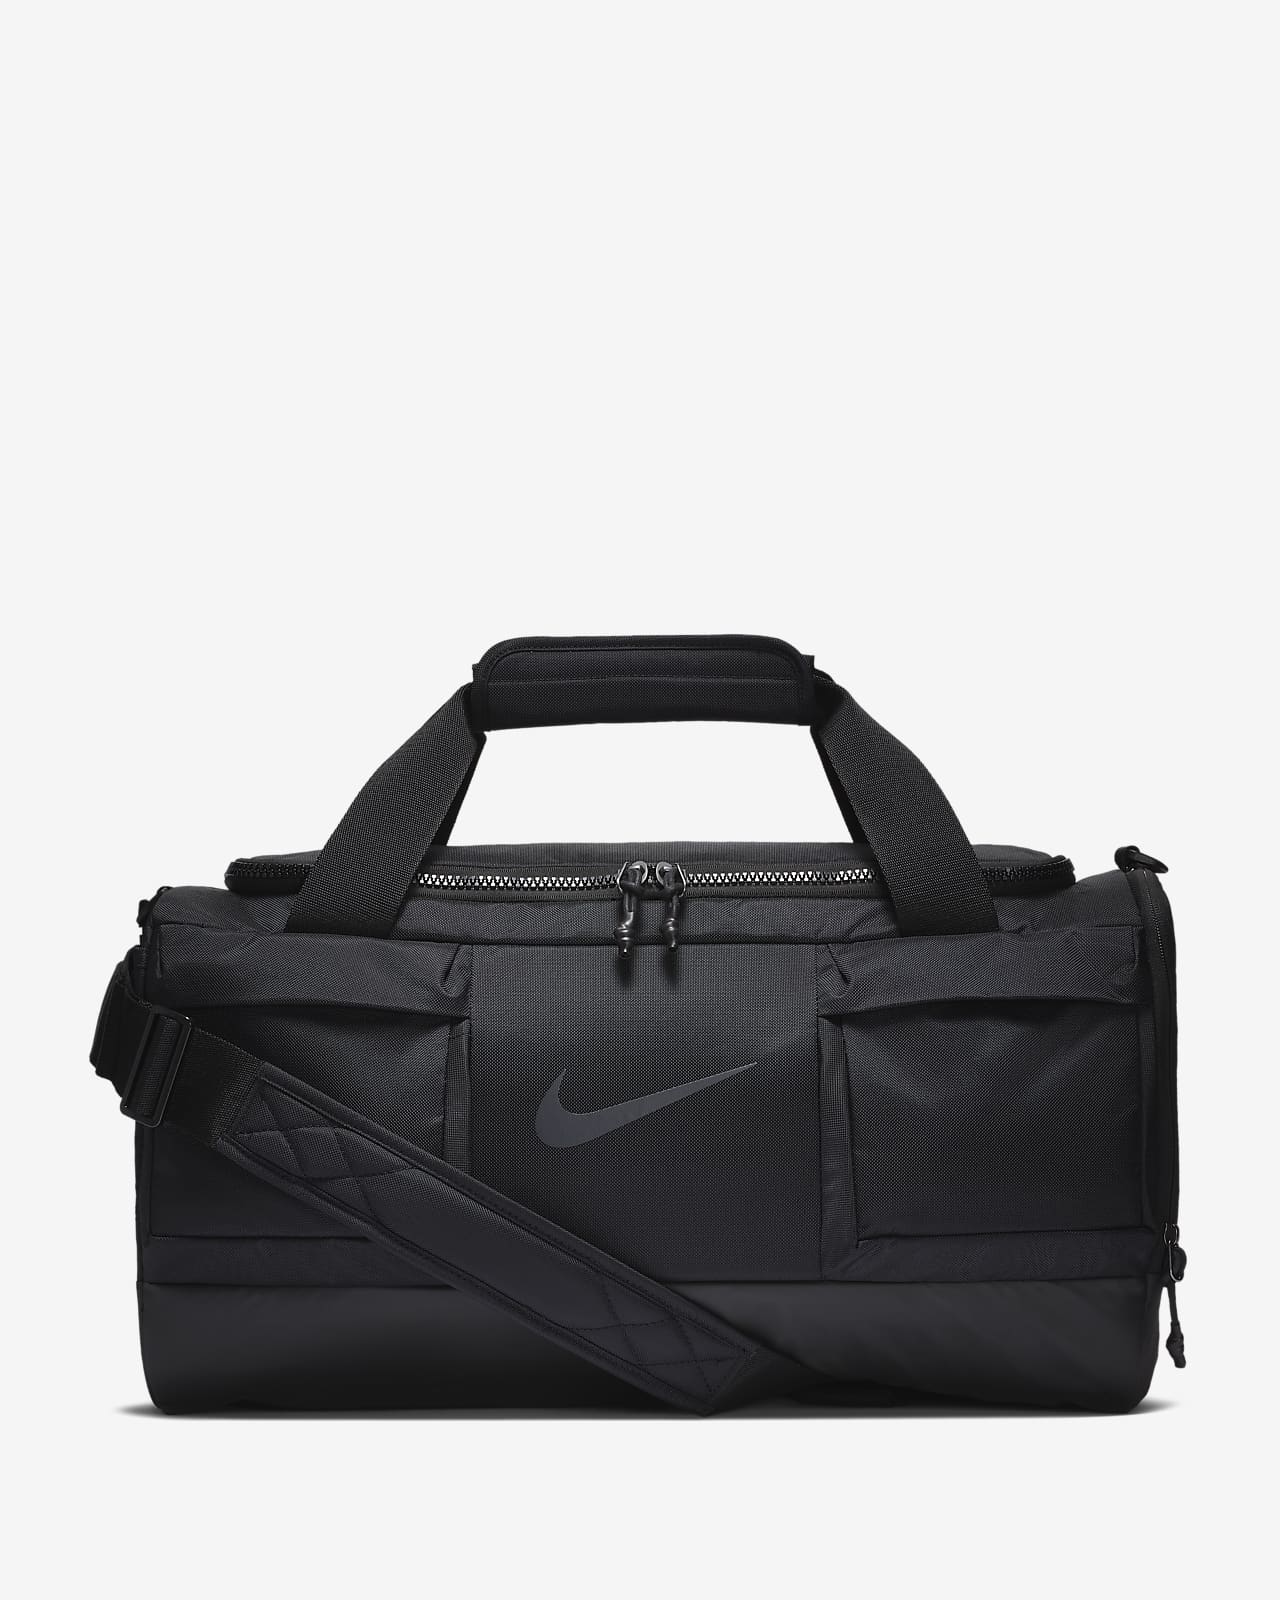 Nike Vapor Power Men's Training Duffel Bag (Small). Nike SG